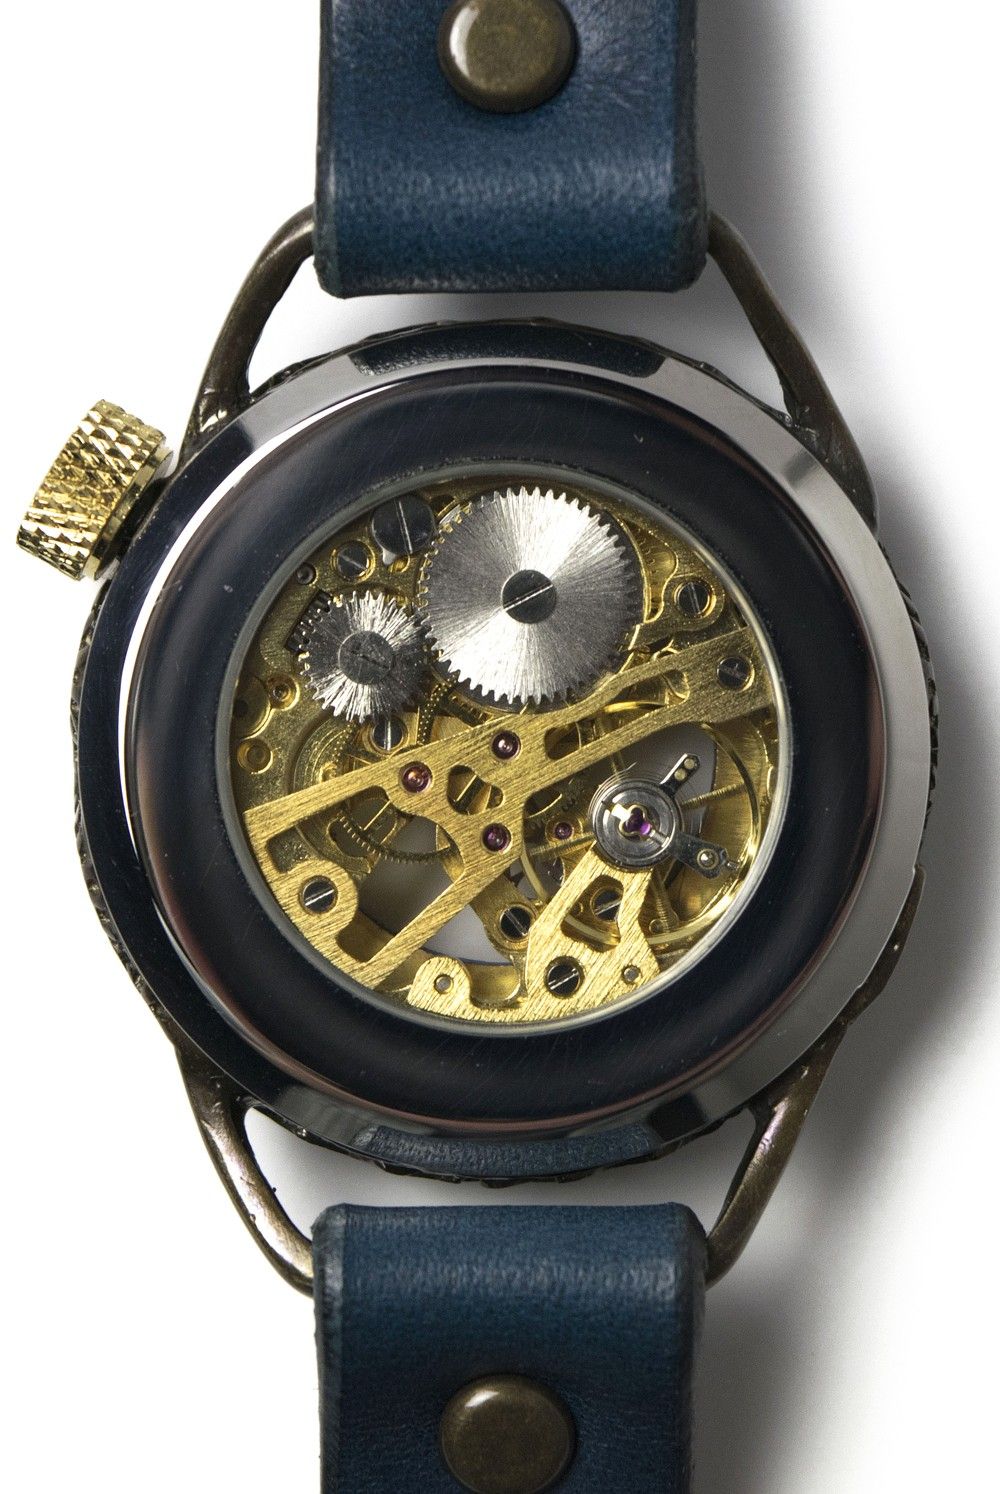 KINO - 【お取り寄せ可能 / 機械式腕時計】メカニックワールド 真鍮 ...